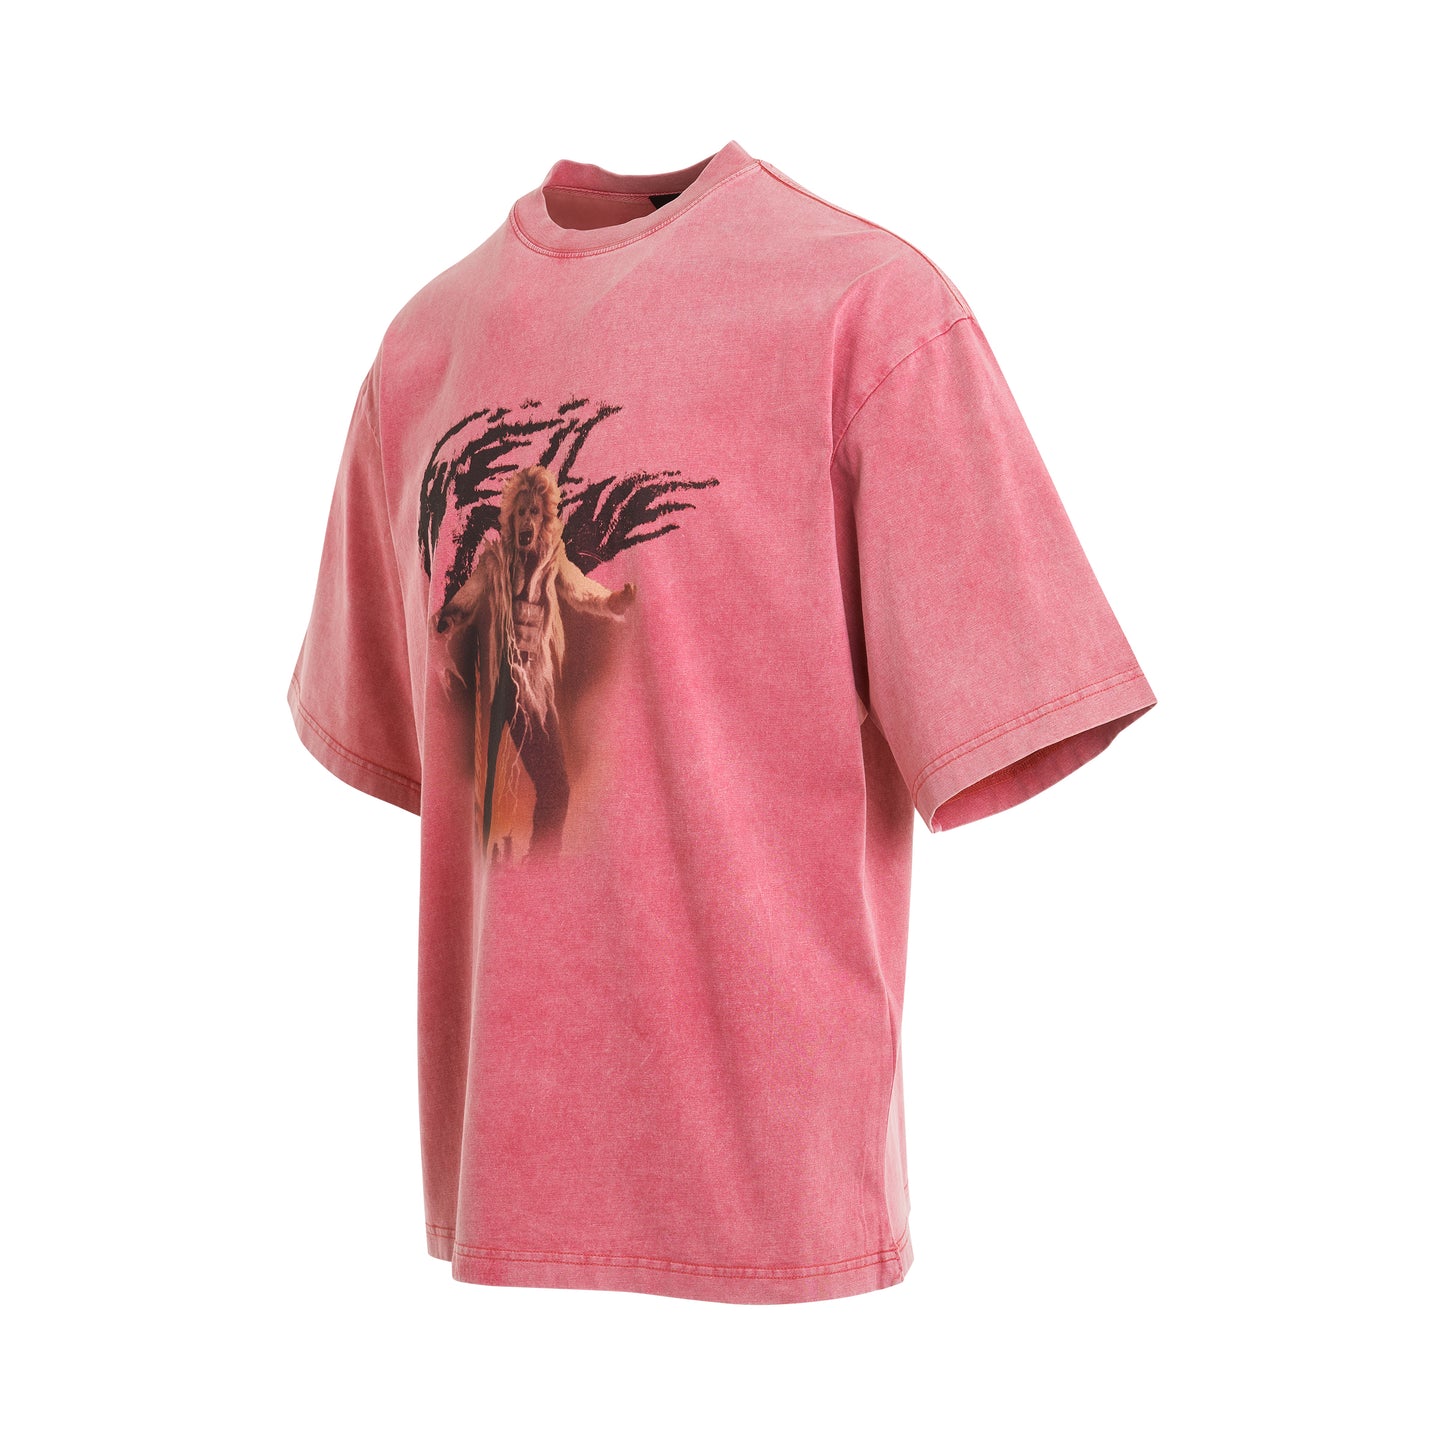 Vintage Horror Print T-Shirt in Pink